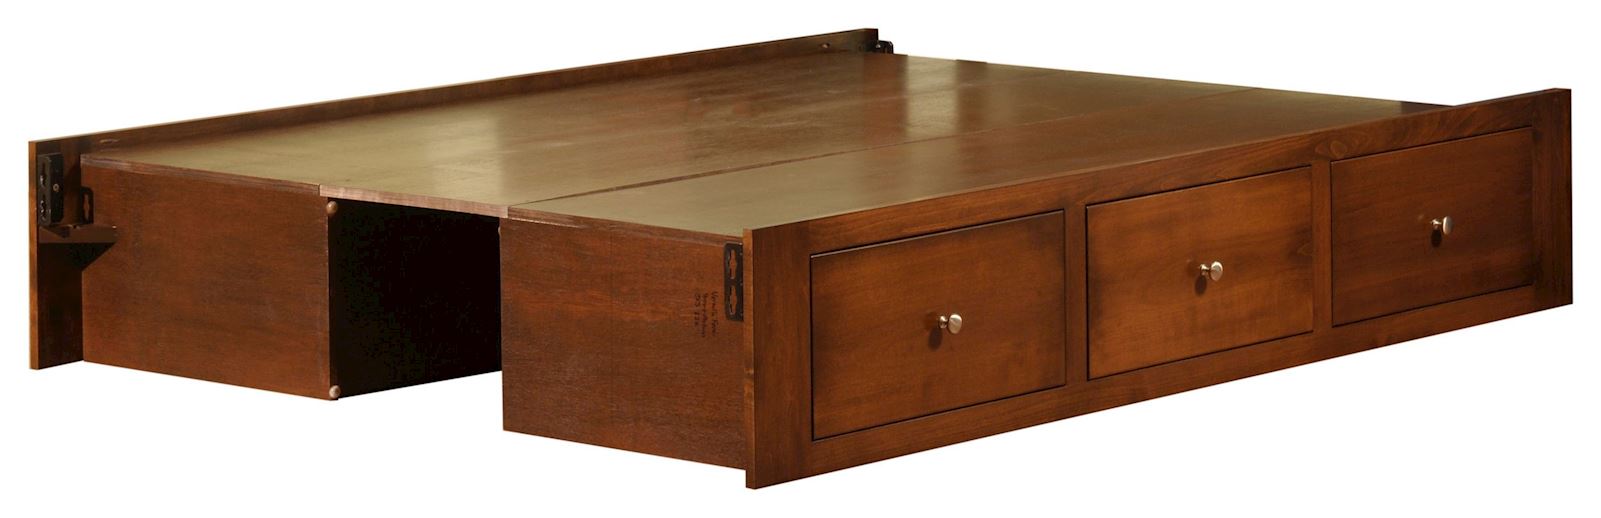 amish-bed-storage-drawers